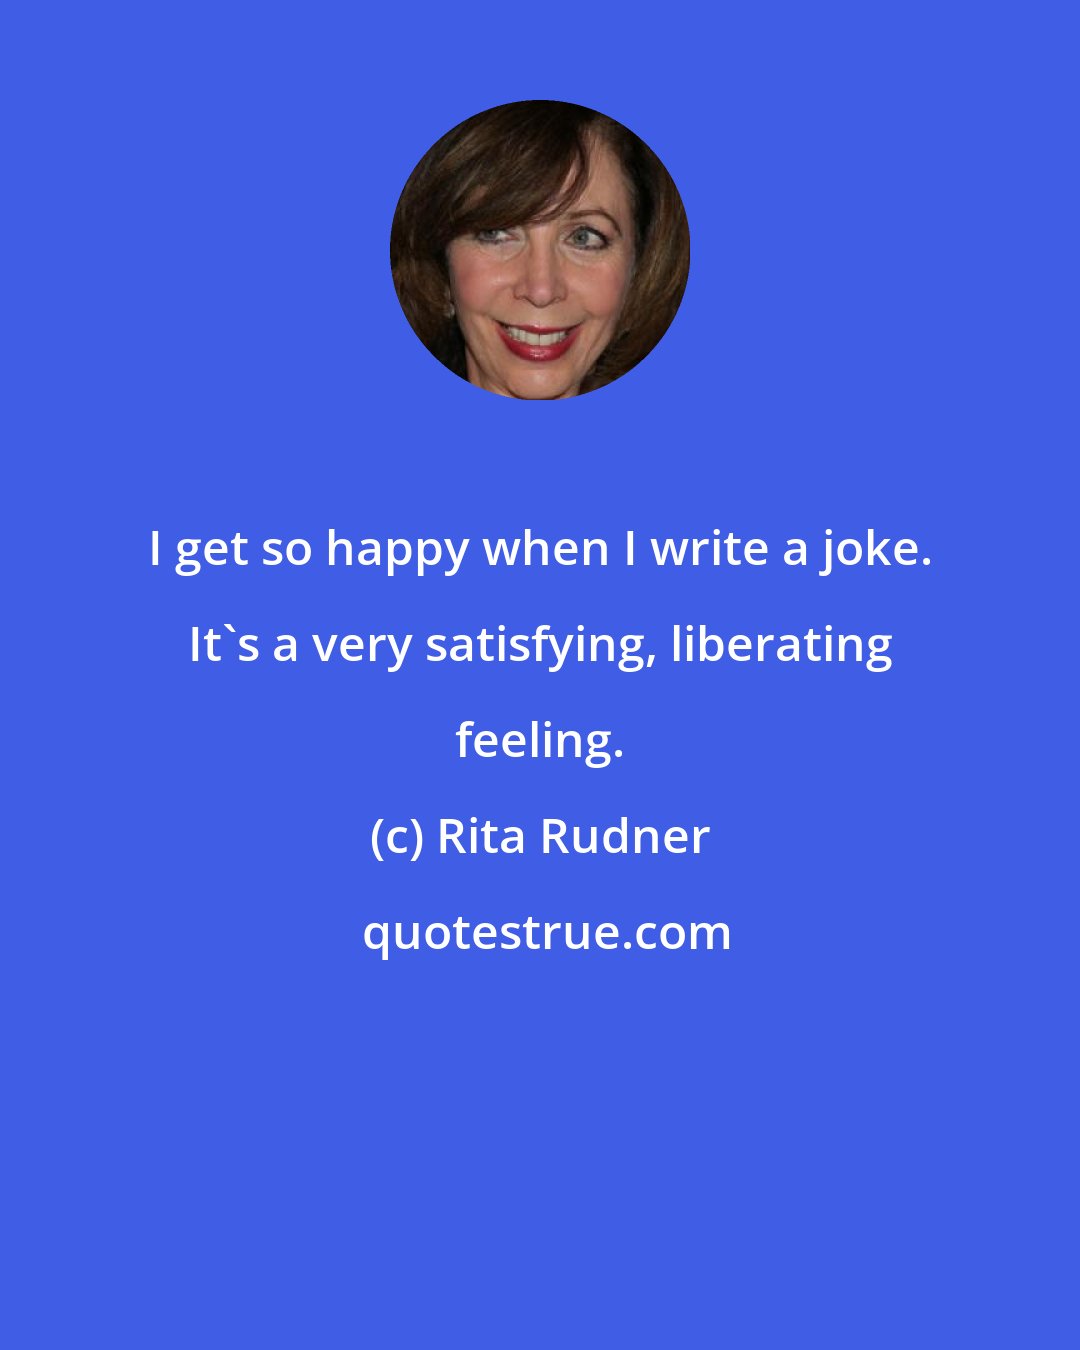 Rita Rudner: I get so happy when I write a joke. It's a very satisfying, liberating feeling.